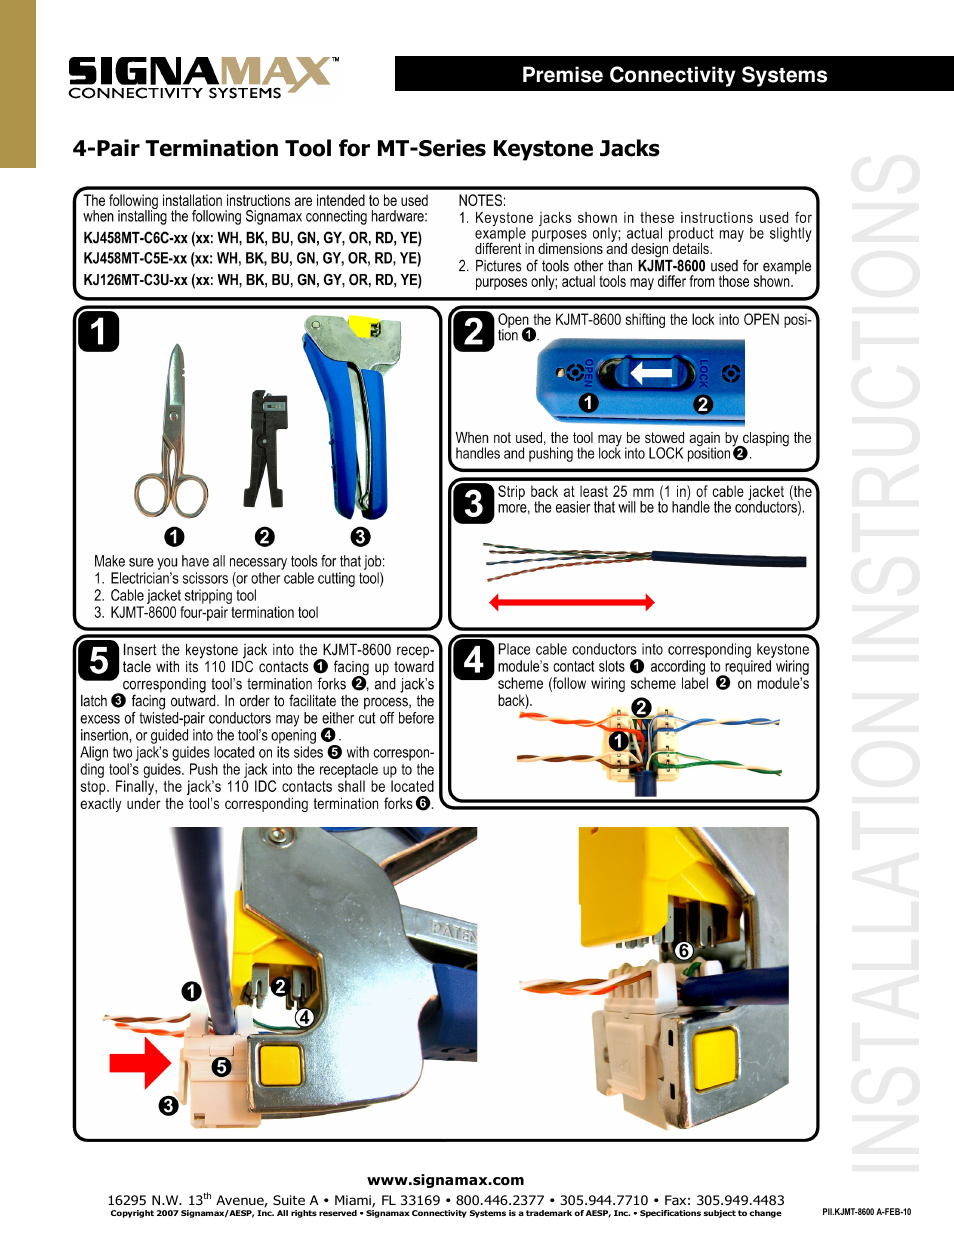 Four-Pair Termination Tool for MT-Series Keystone Jacks